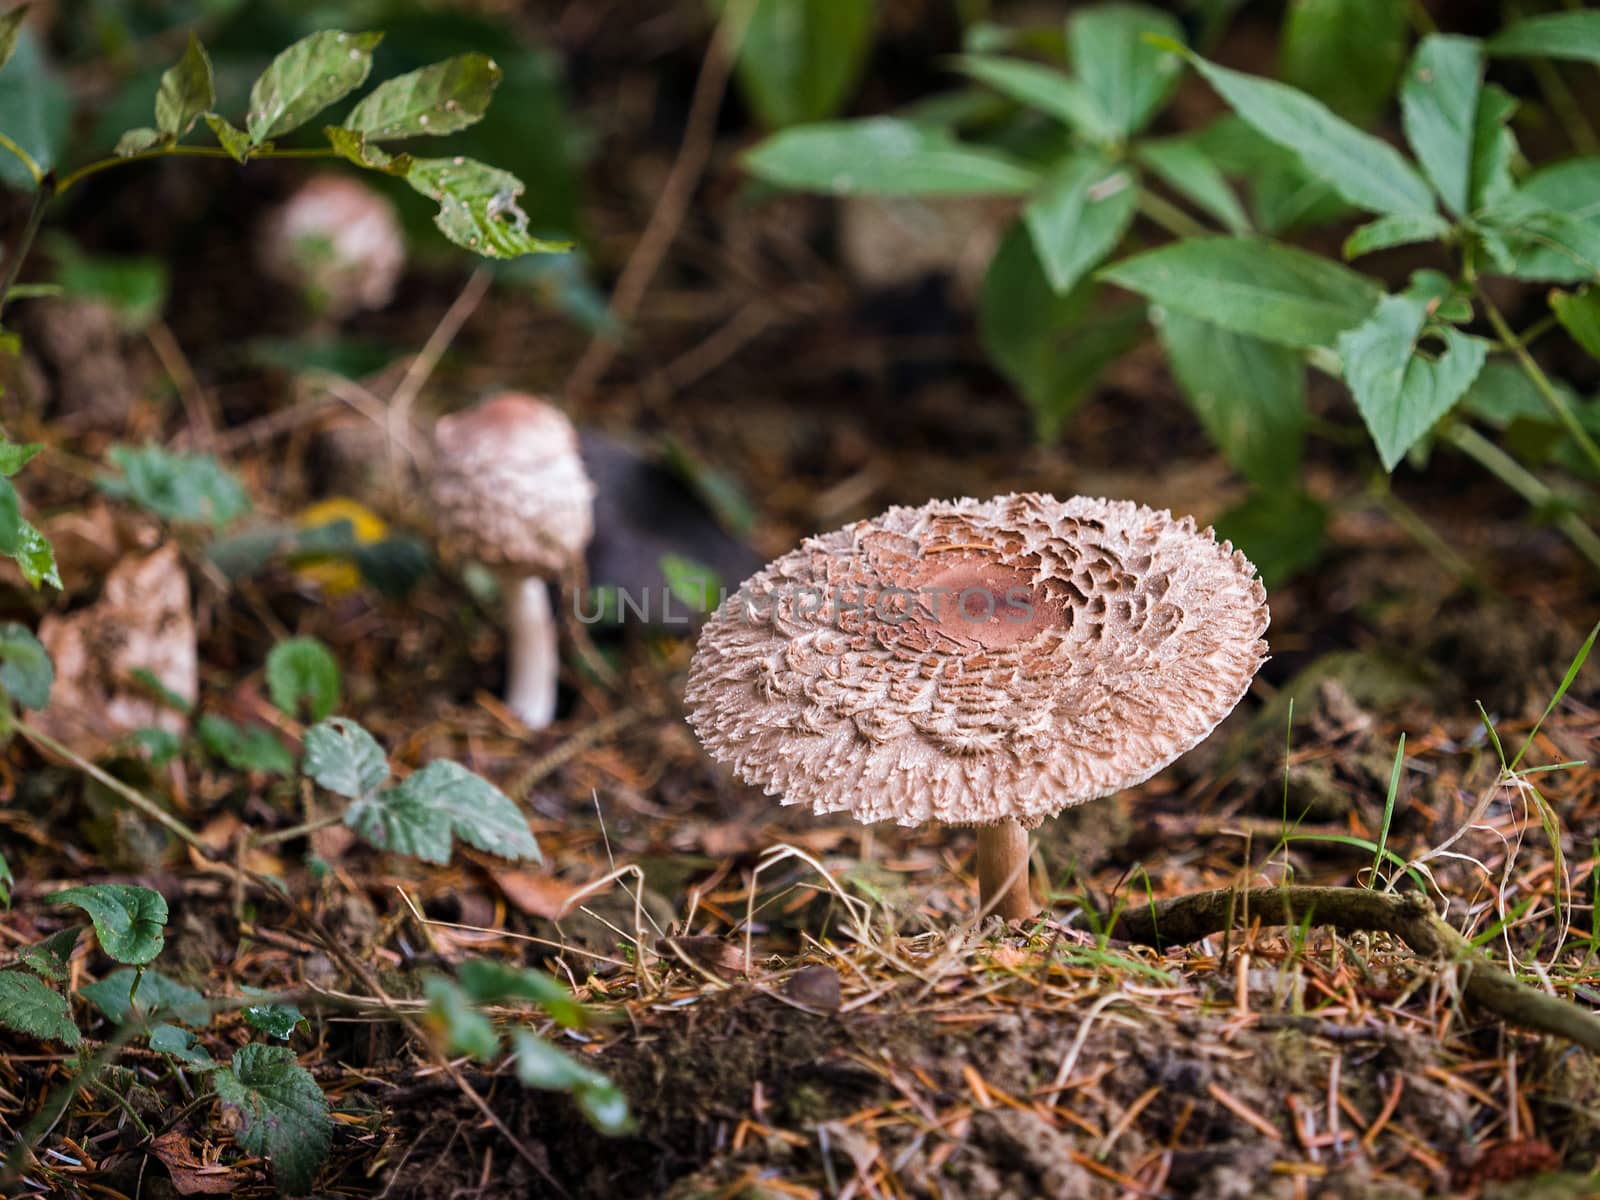 Weathered Fungus at Warnham Nature Reserve by phil_bird